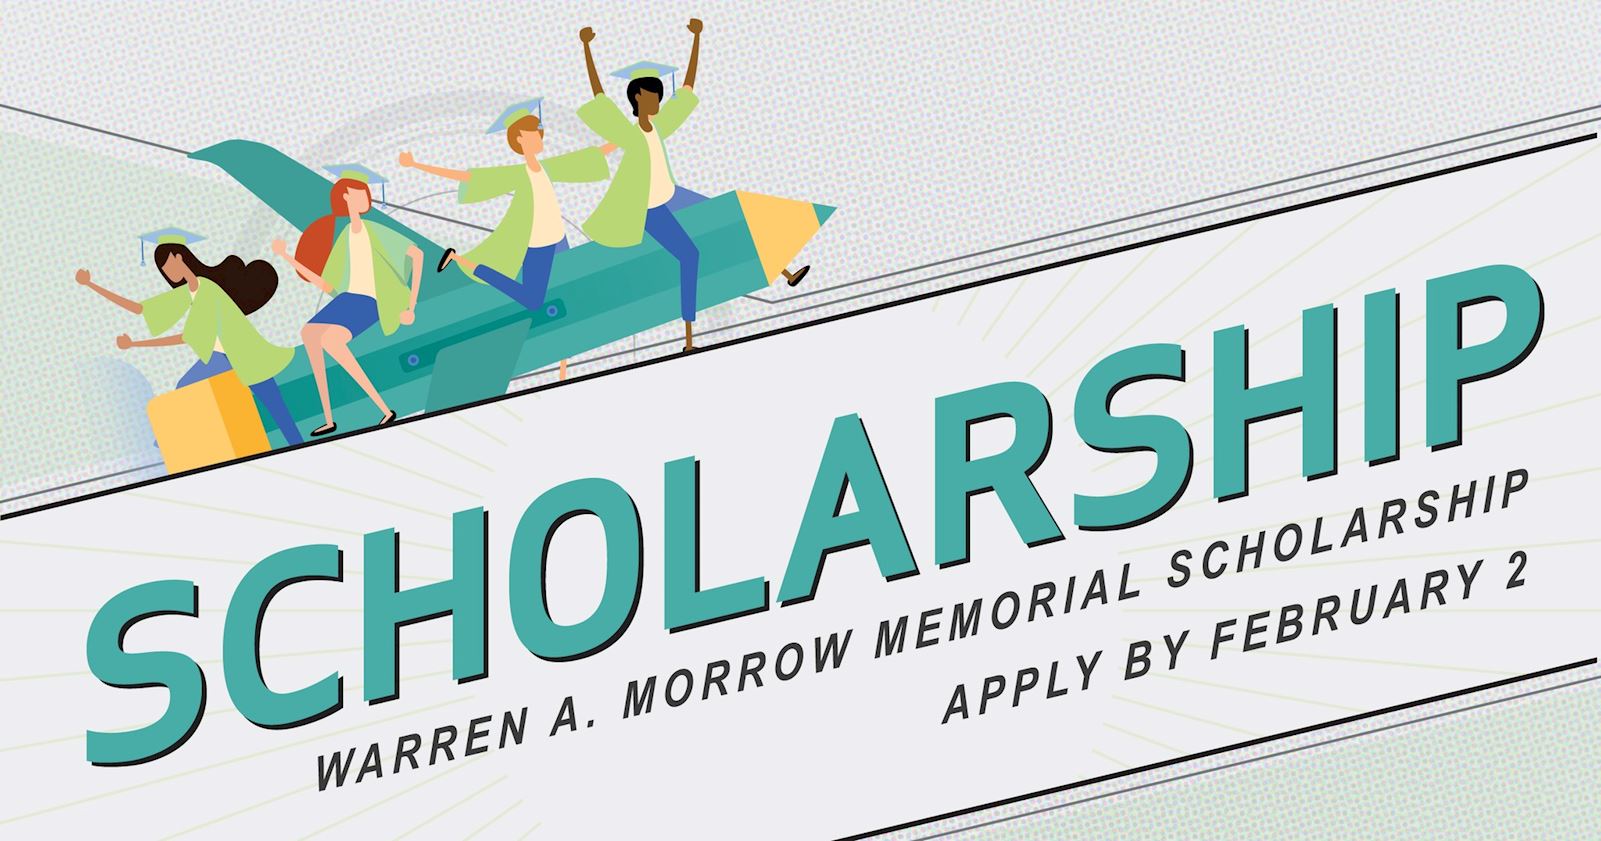 Warren A Morrow Memorial Scholarship